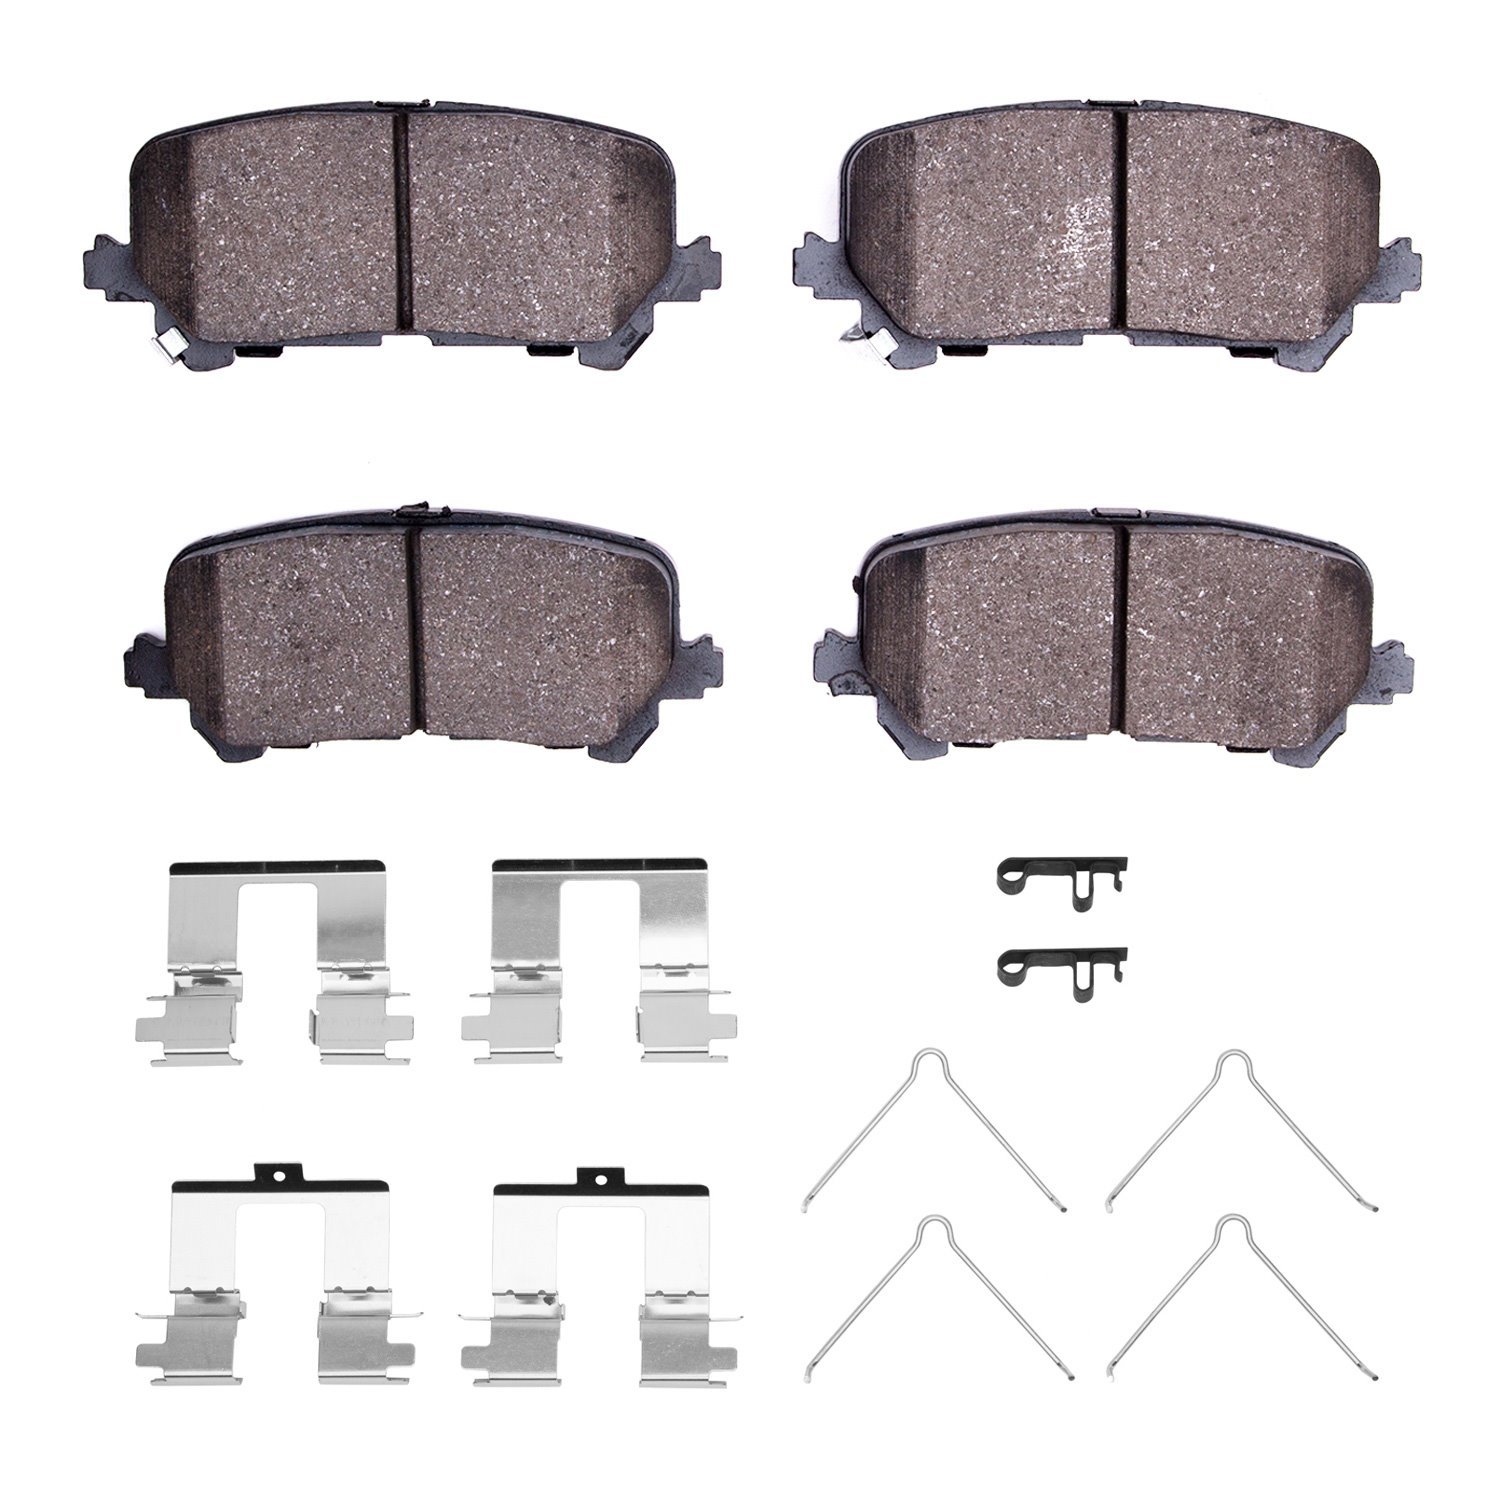 Ceramic Brake Pads & Hardware Kit, Fits Select Acura/Honda, Position: Rear